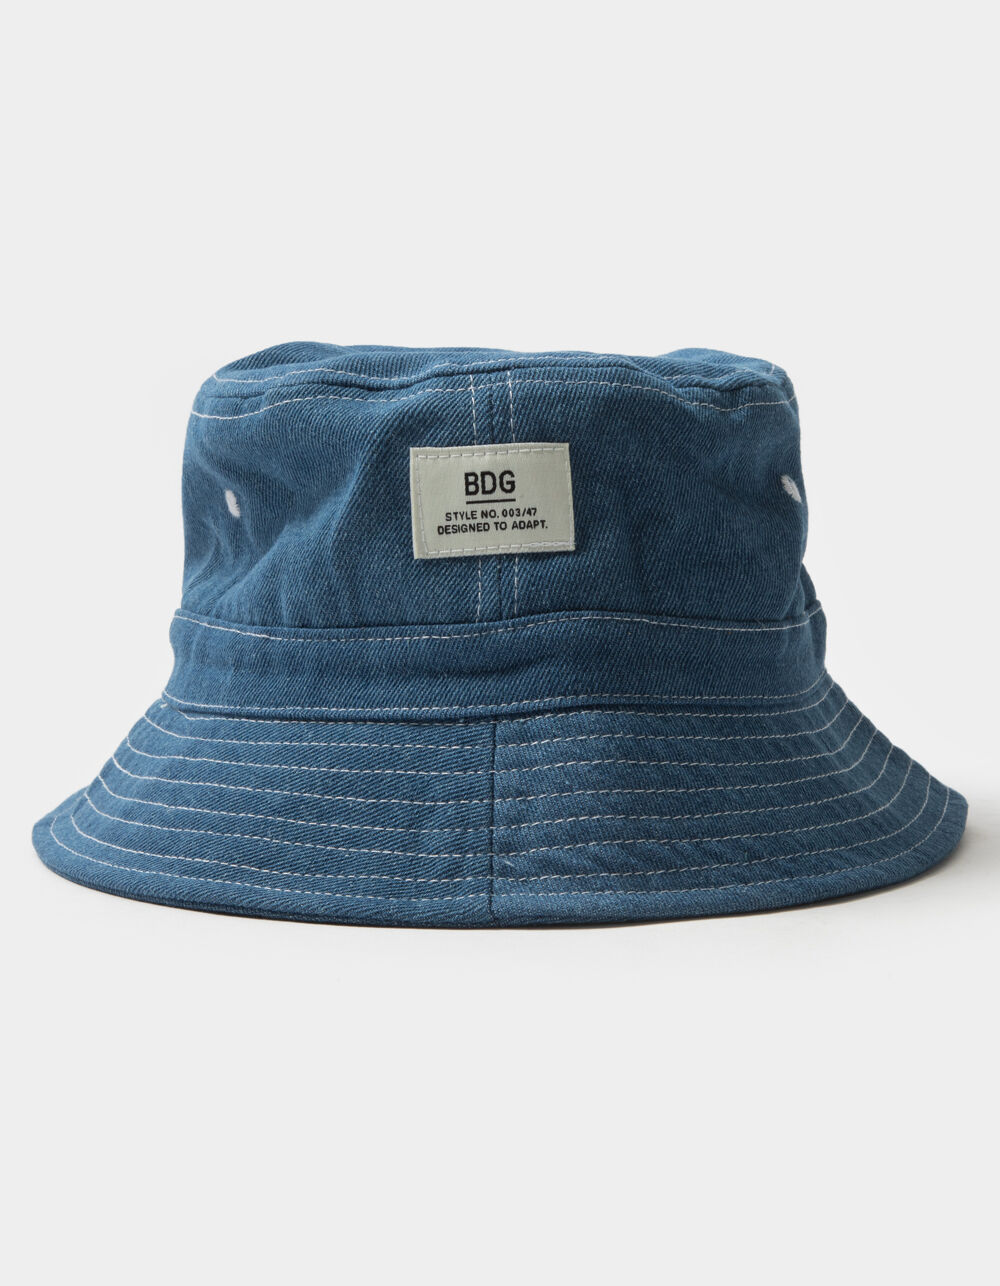 BDG Urban Outfitters Denim Bucket Hat - DENIM | Tillys